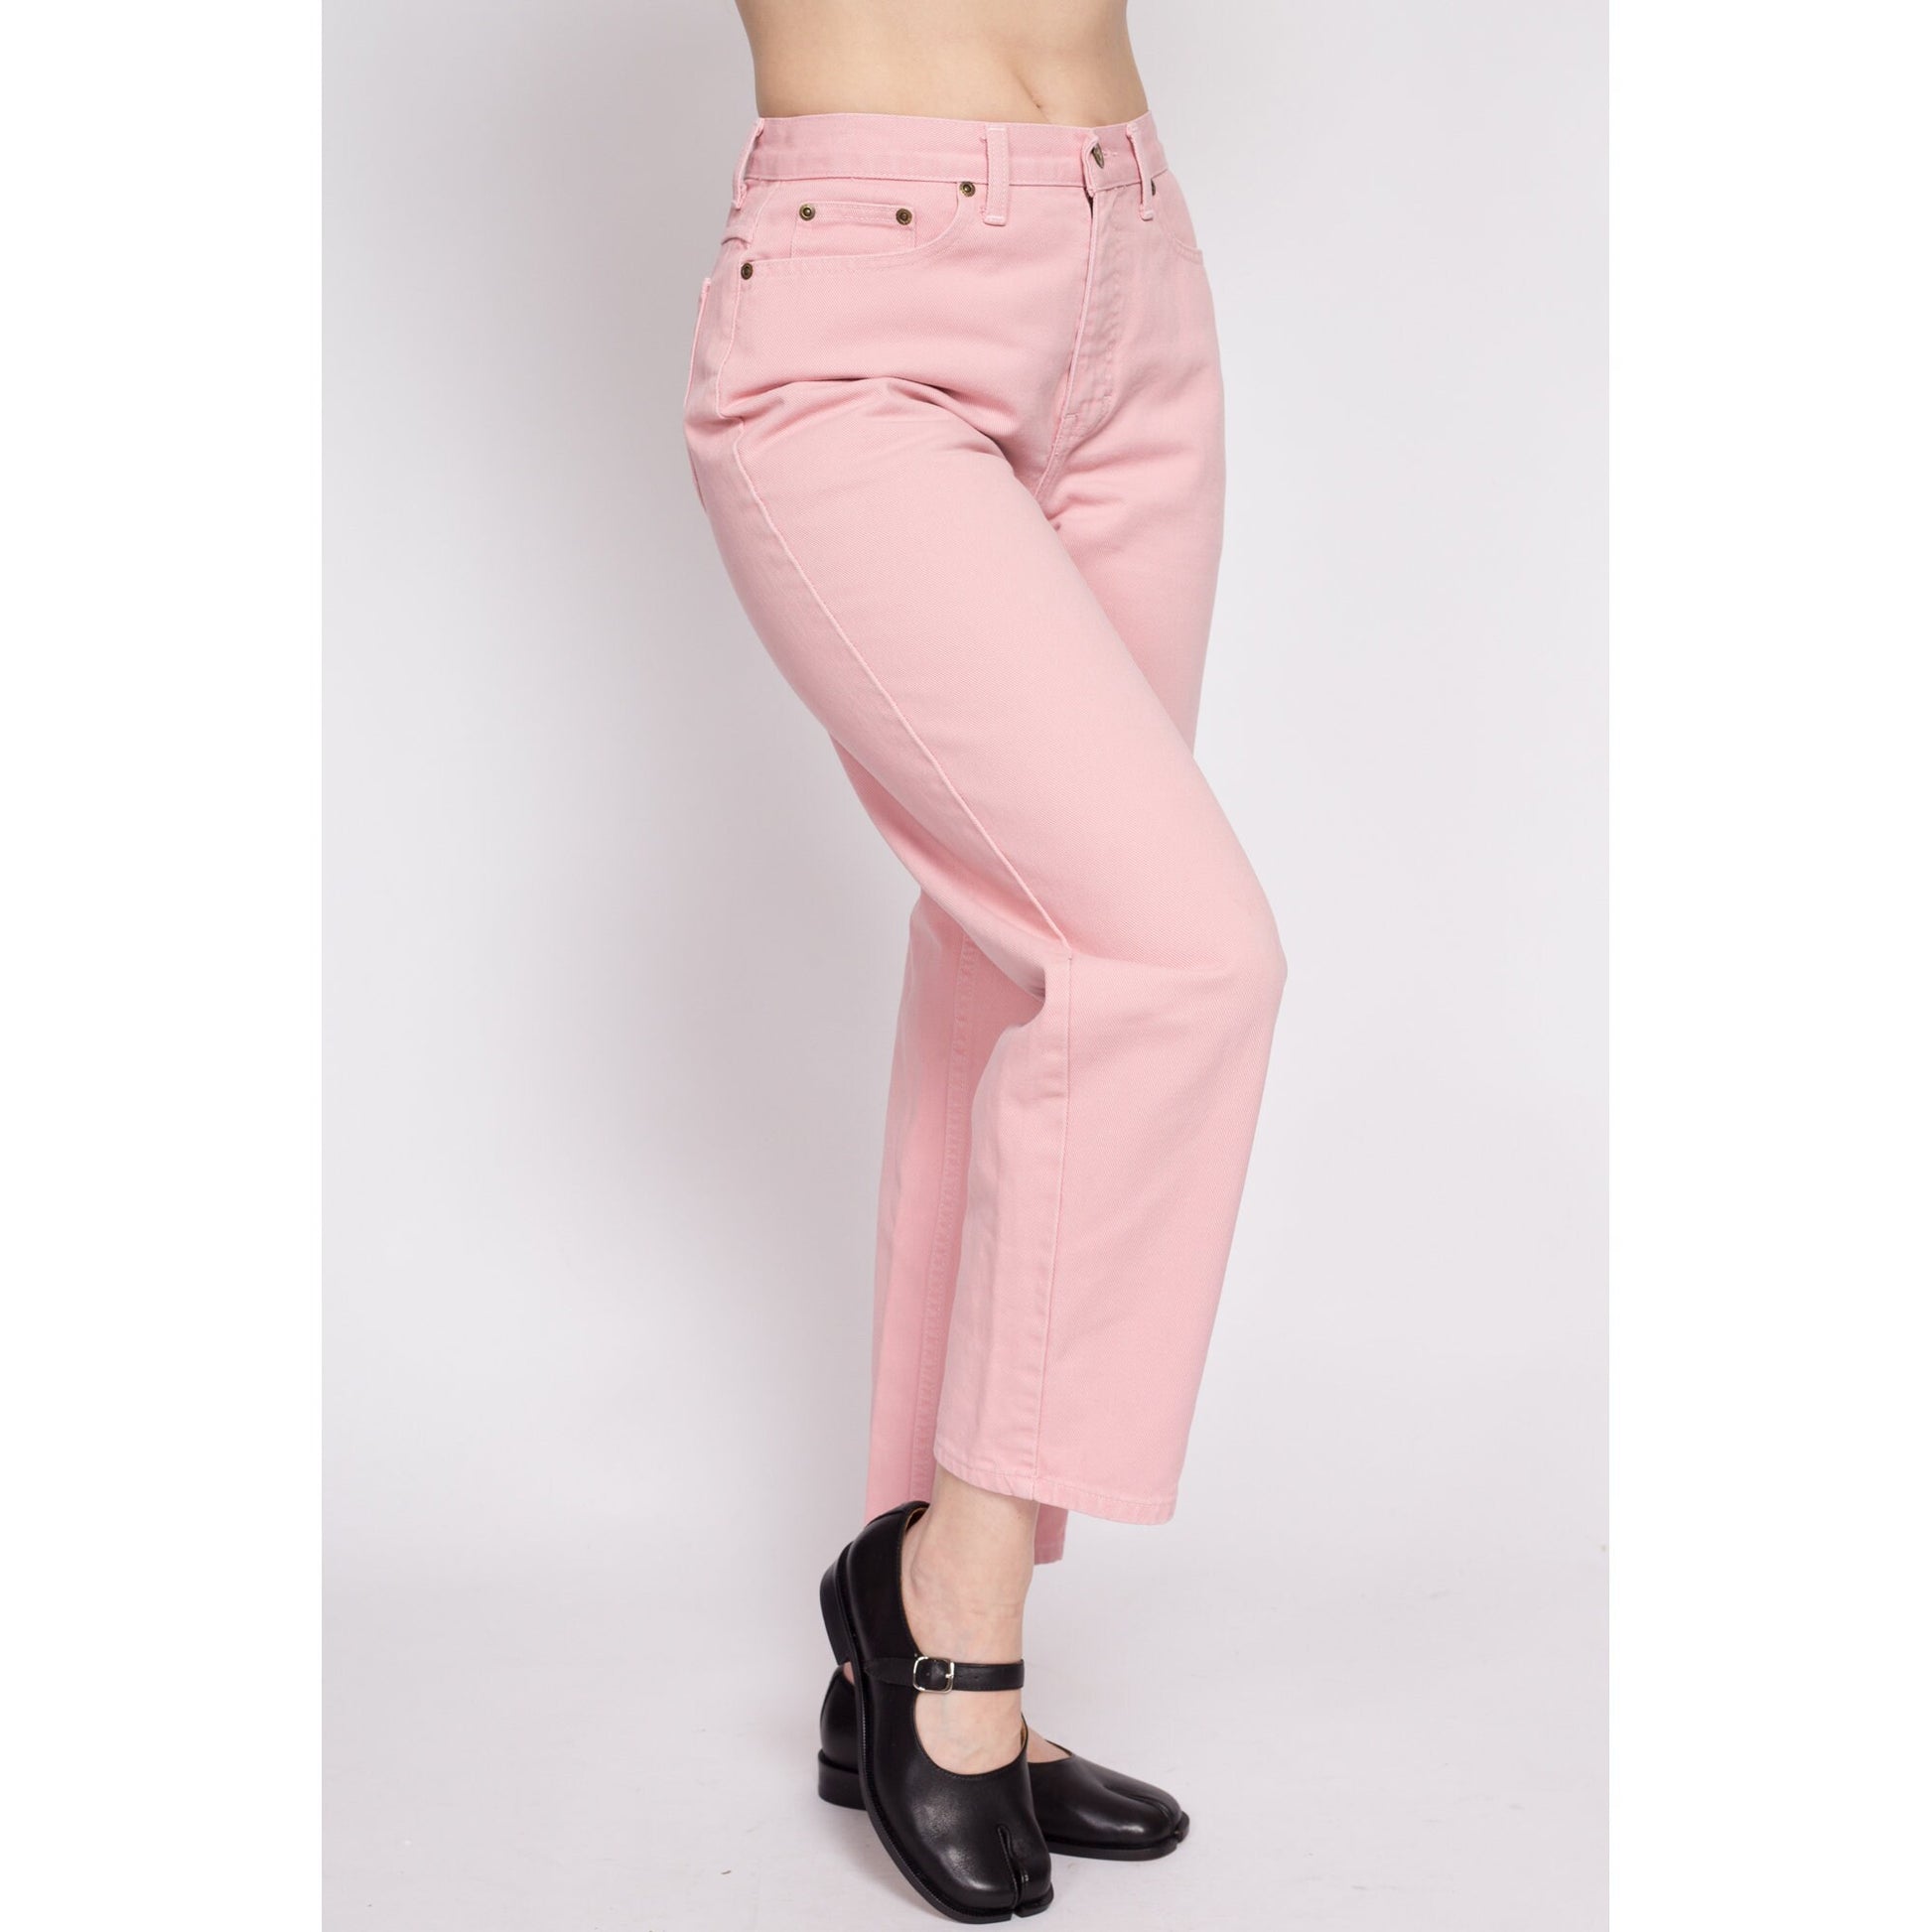 90s Blush Pink High Waisted Jeans - Petite Medium, 28.5" | Vintage Newport News Pastel Denim Tapered Leg Mom Jeans